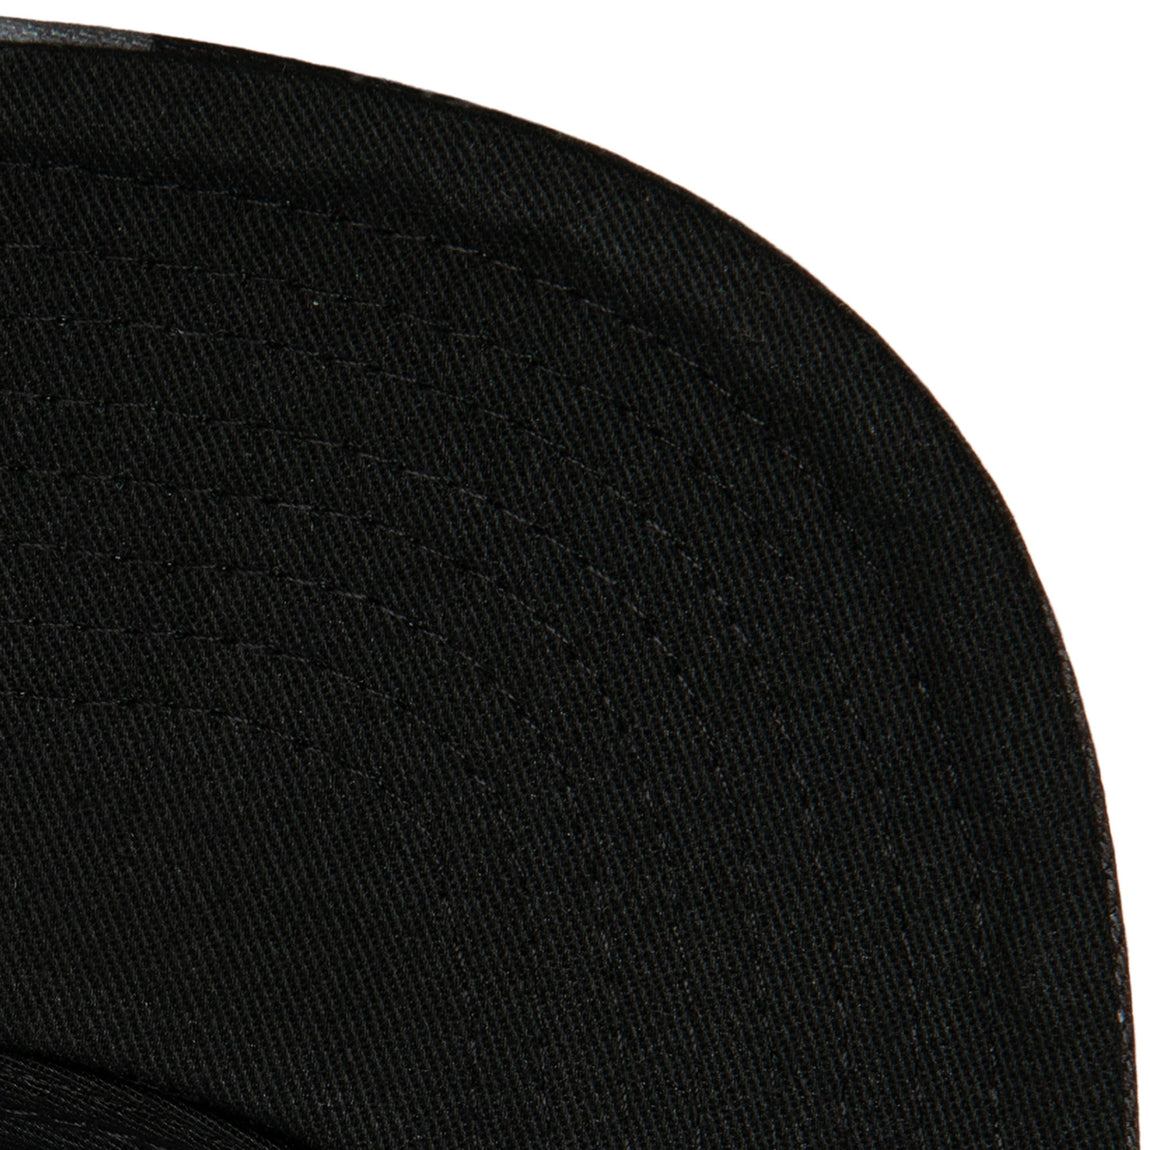 Mitchell & Ness Dallas Mavericks NBA Tonal Camo Hardwood Classics Snapback Hat ( Black / Grey ) - Mitchell & Ness Dallas Mavericks NBA Tonal Camo Hardwood Classics Snapback Hat ( Black / Grey ) - 